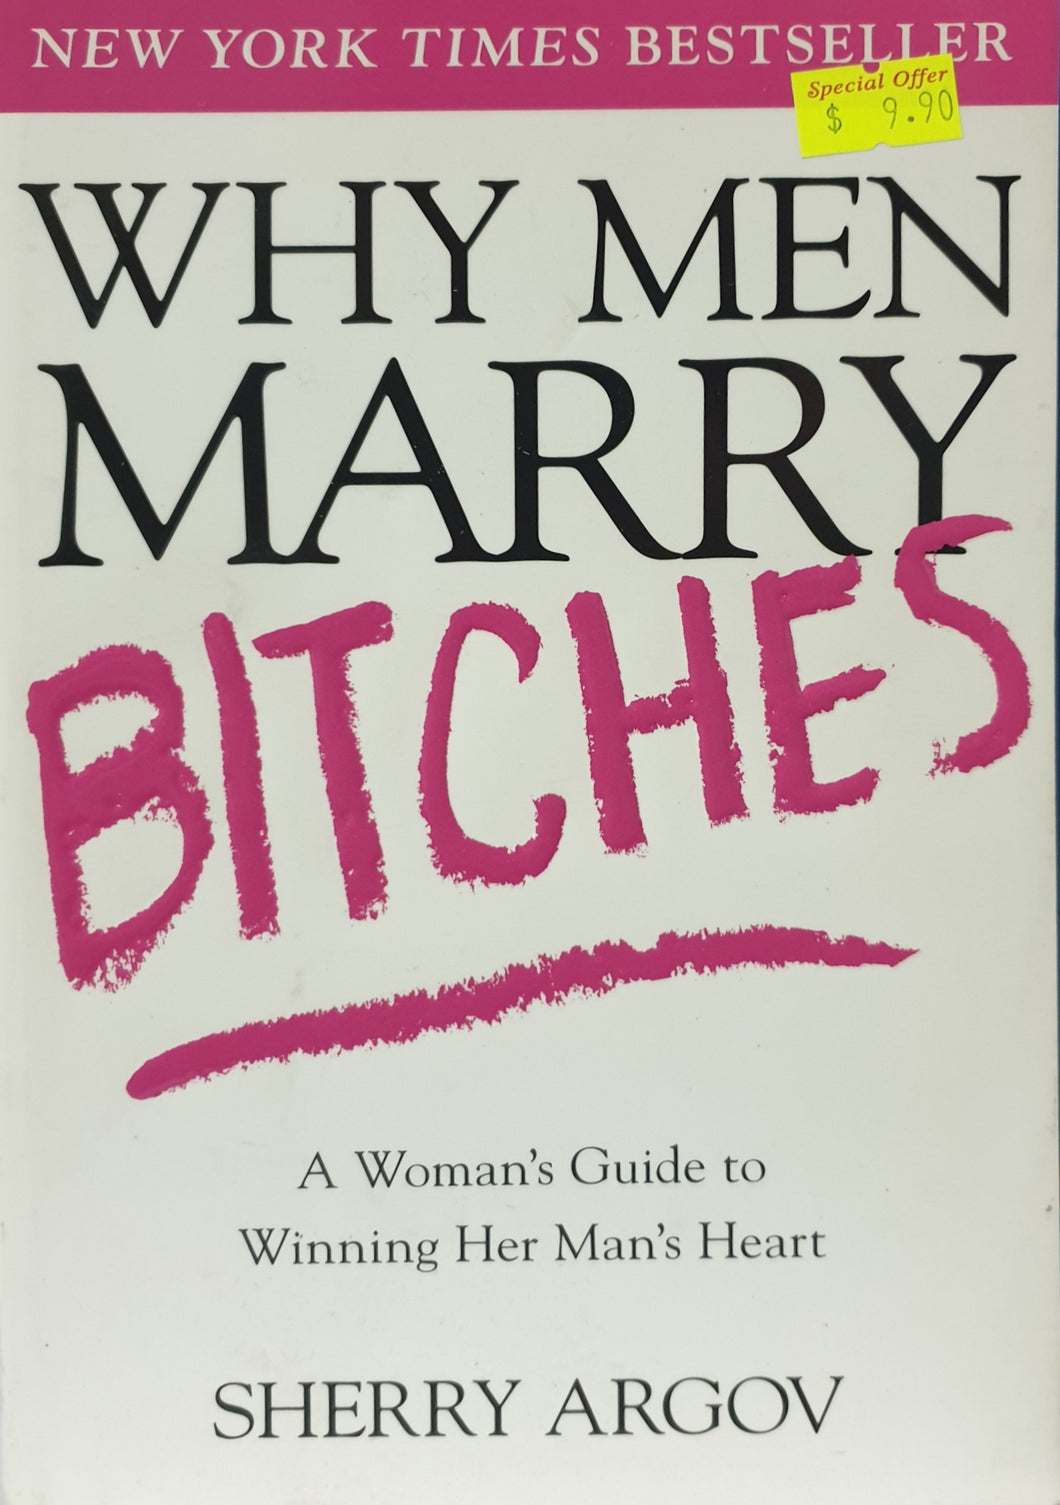 Why Men Marry Bitches - Sherry Argov